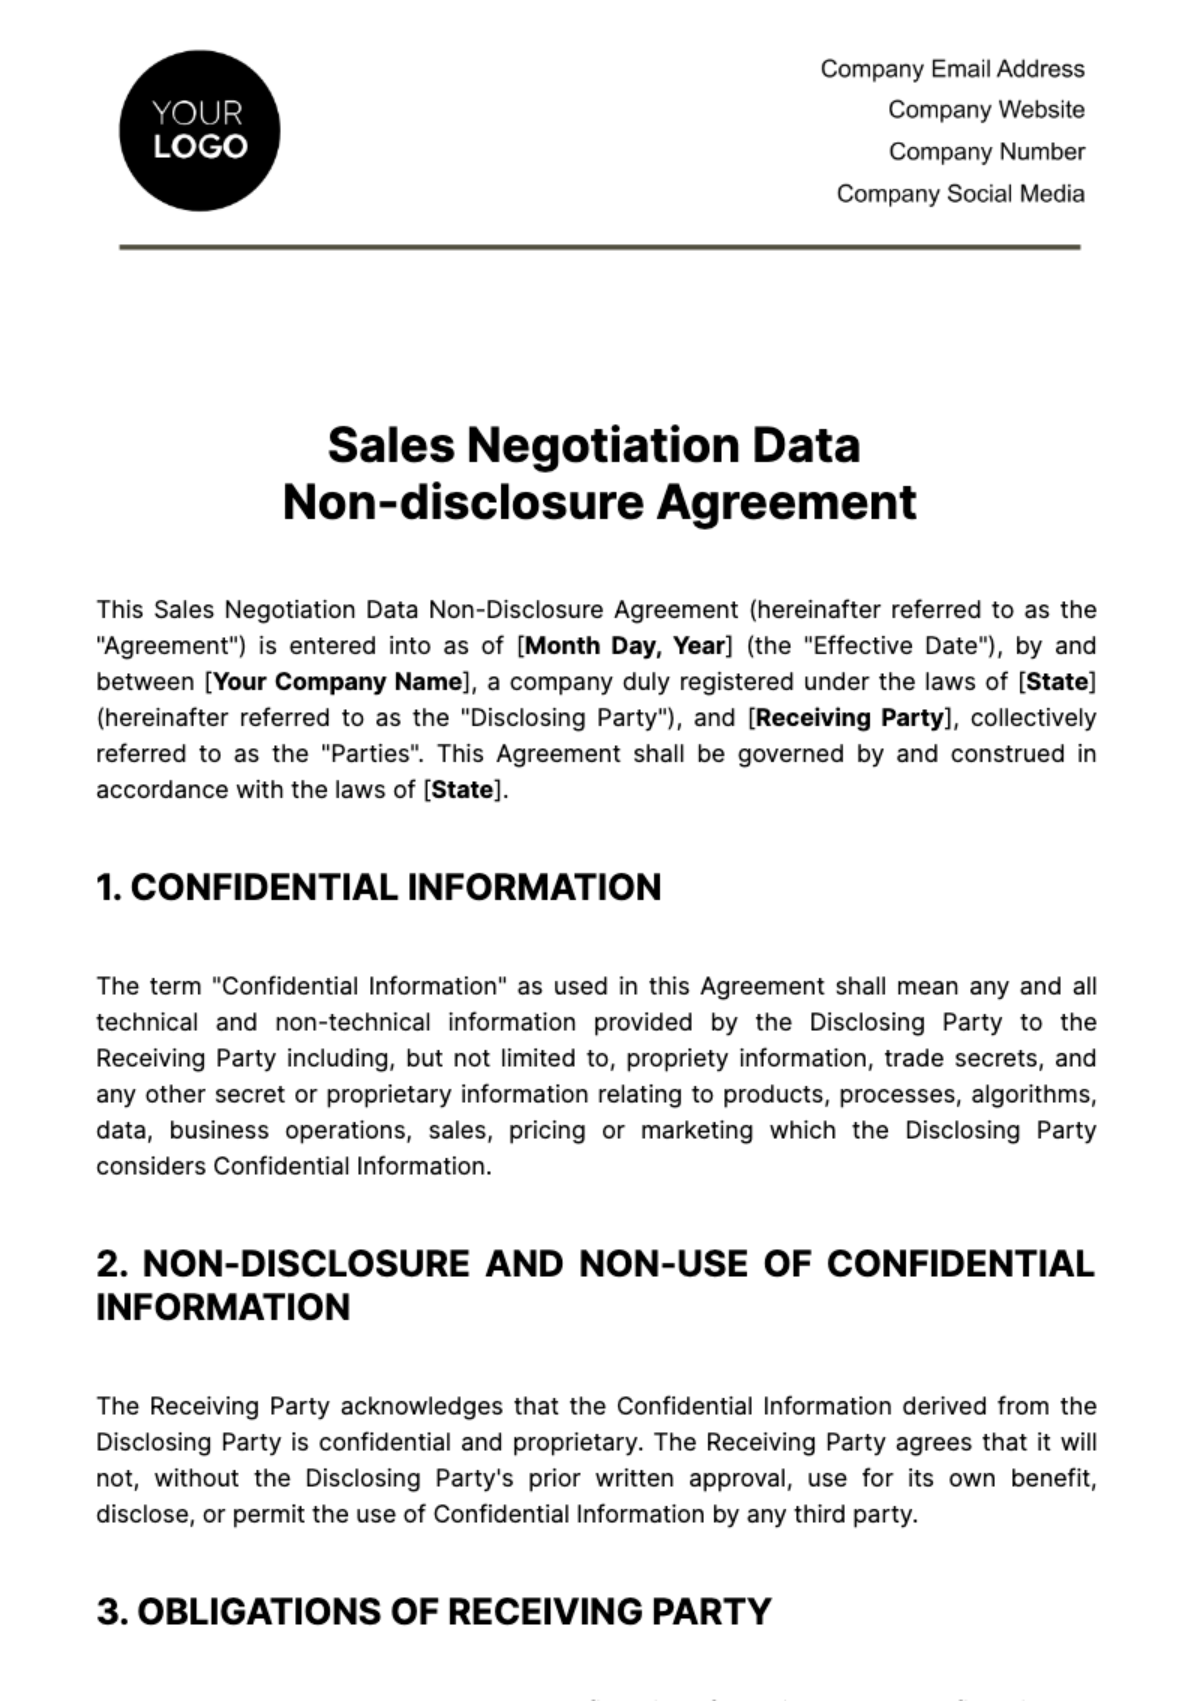 Sales Negotiation Data NDA Template